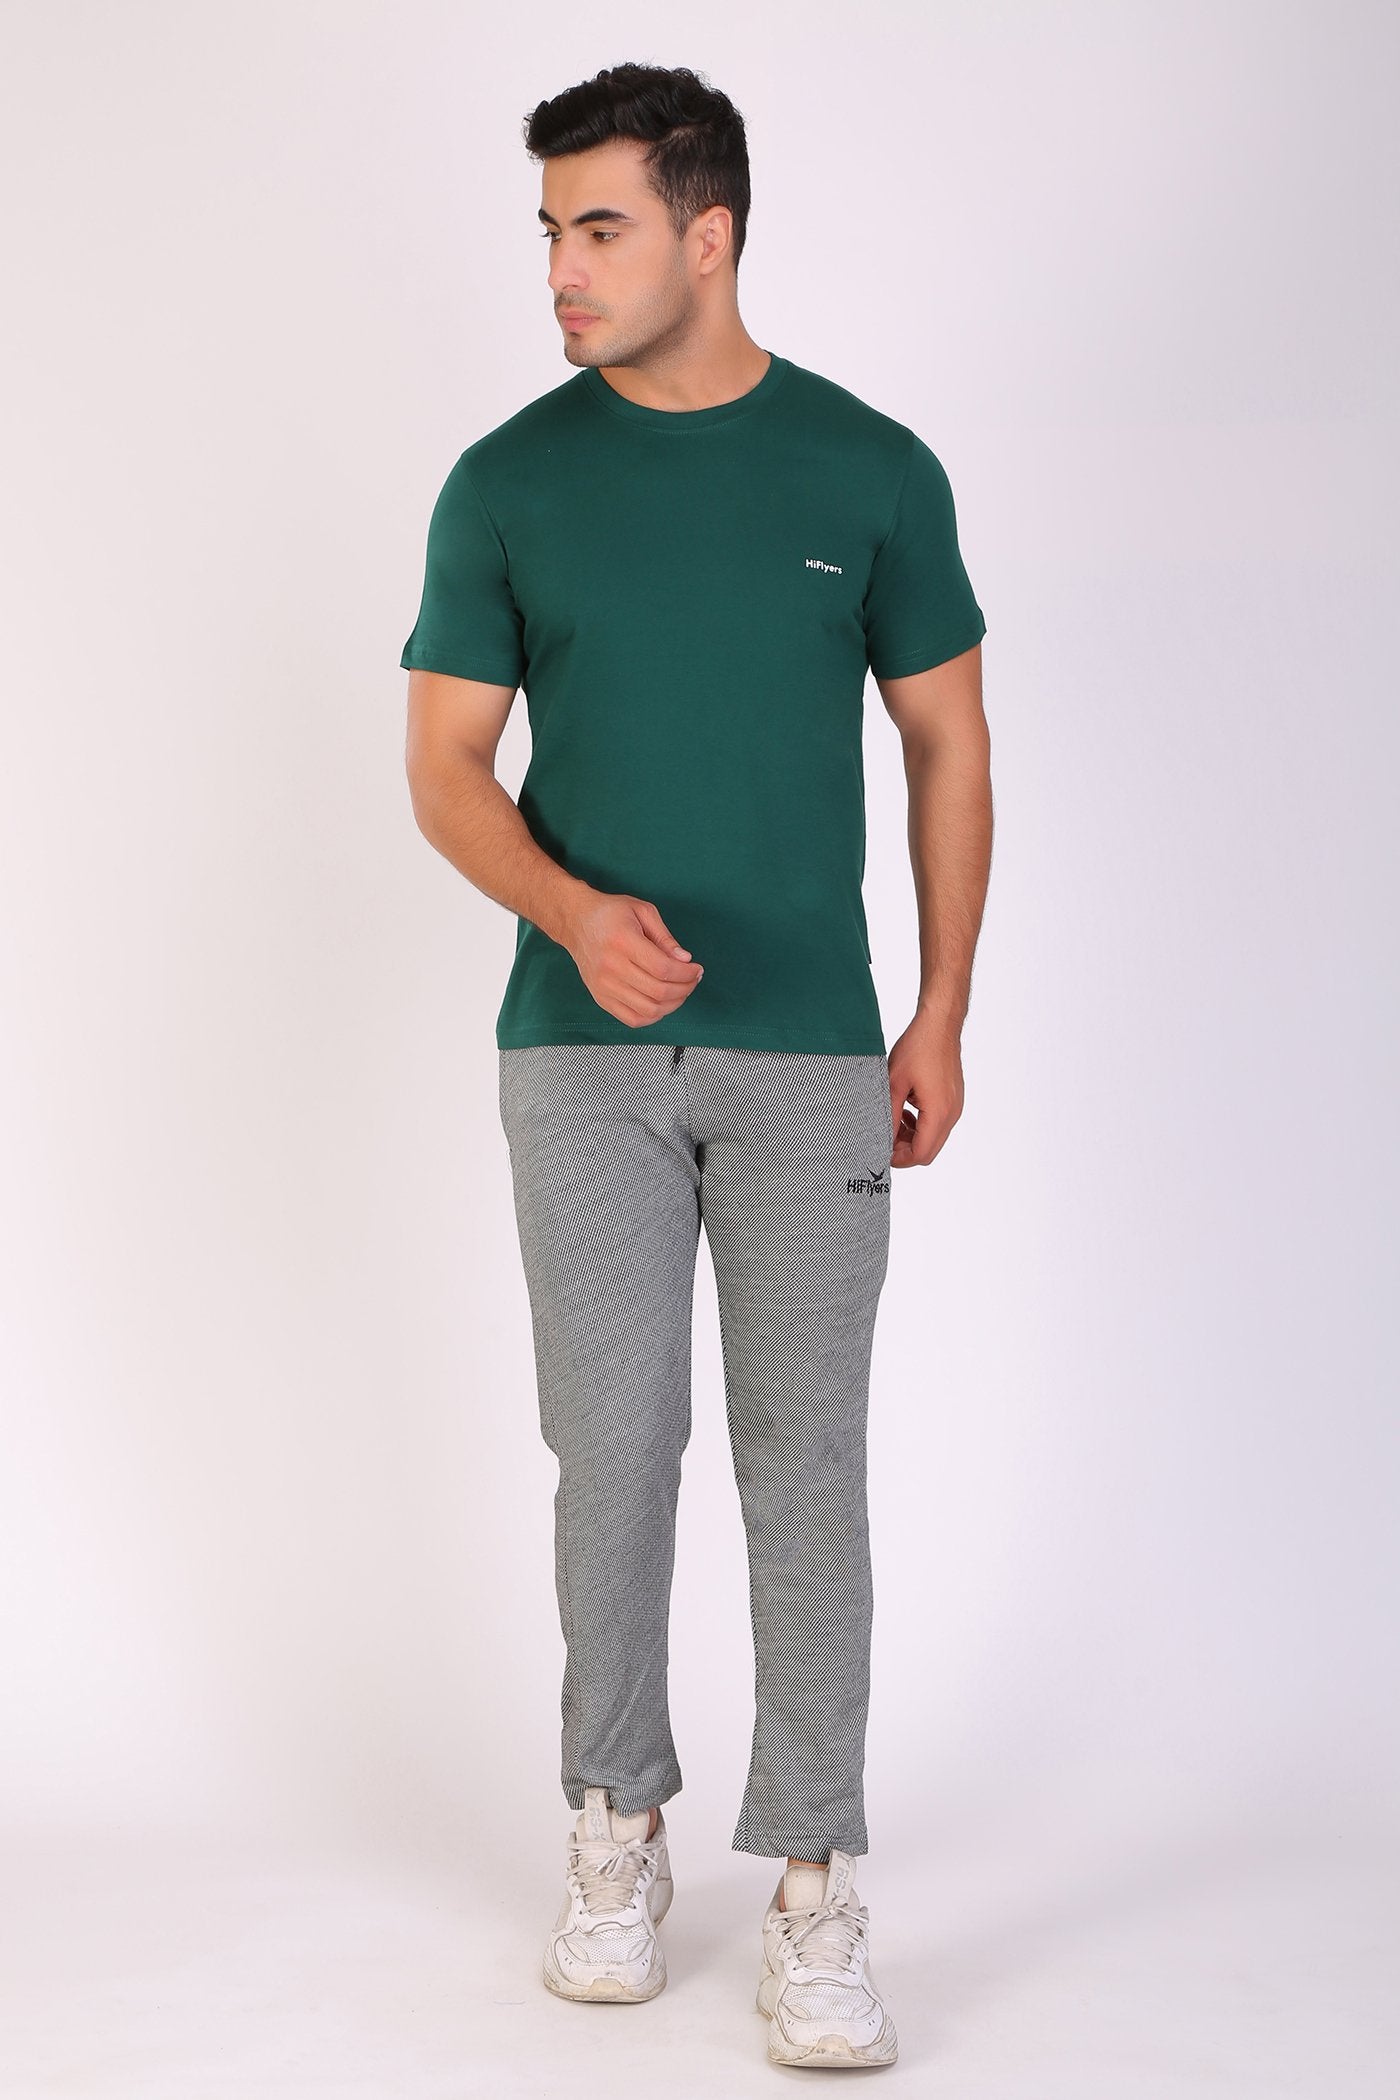 Hiflyers Men Slim Fit Solid Pack Of 2 Premium RN T-Shirt Teal Blue::Eden Green